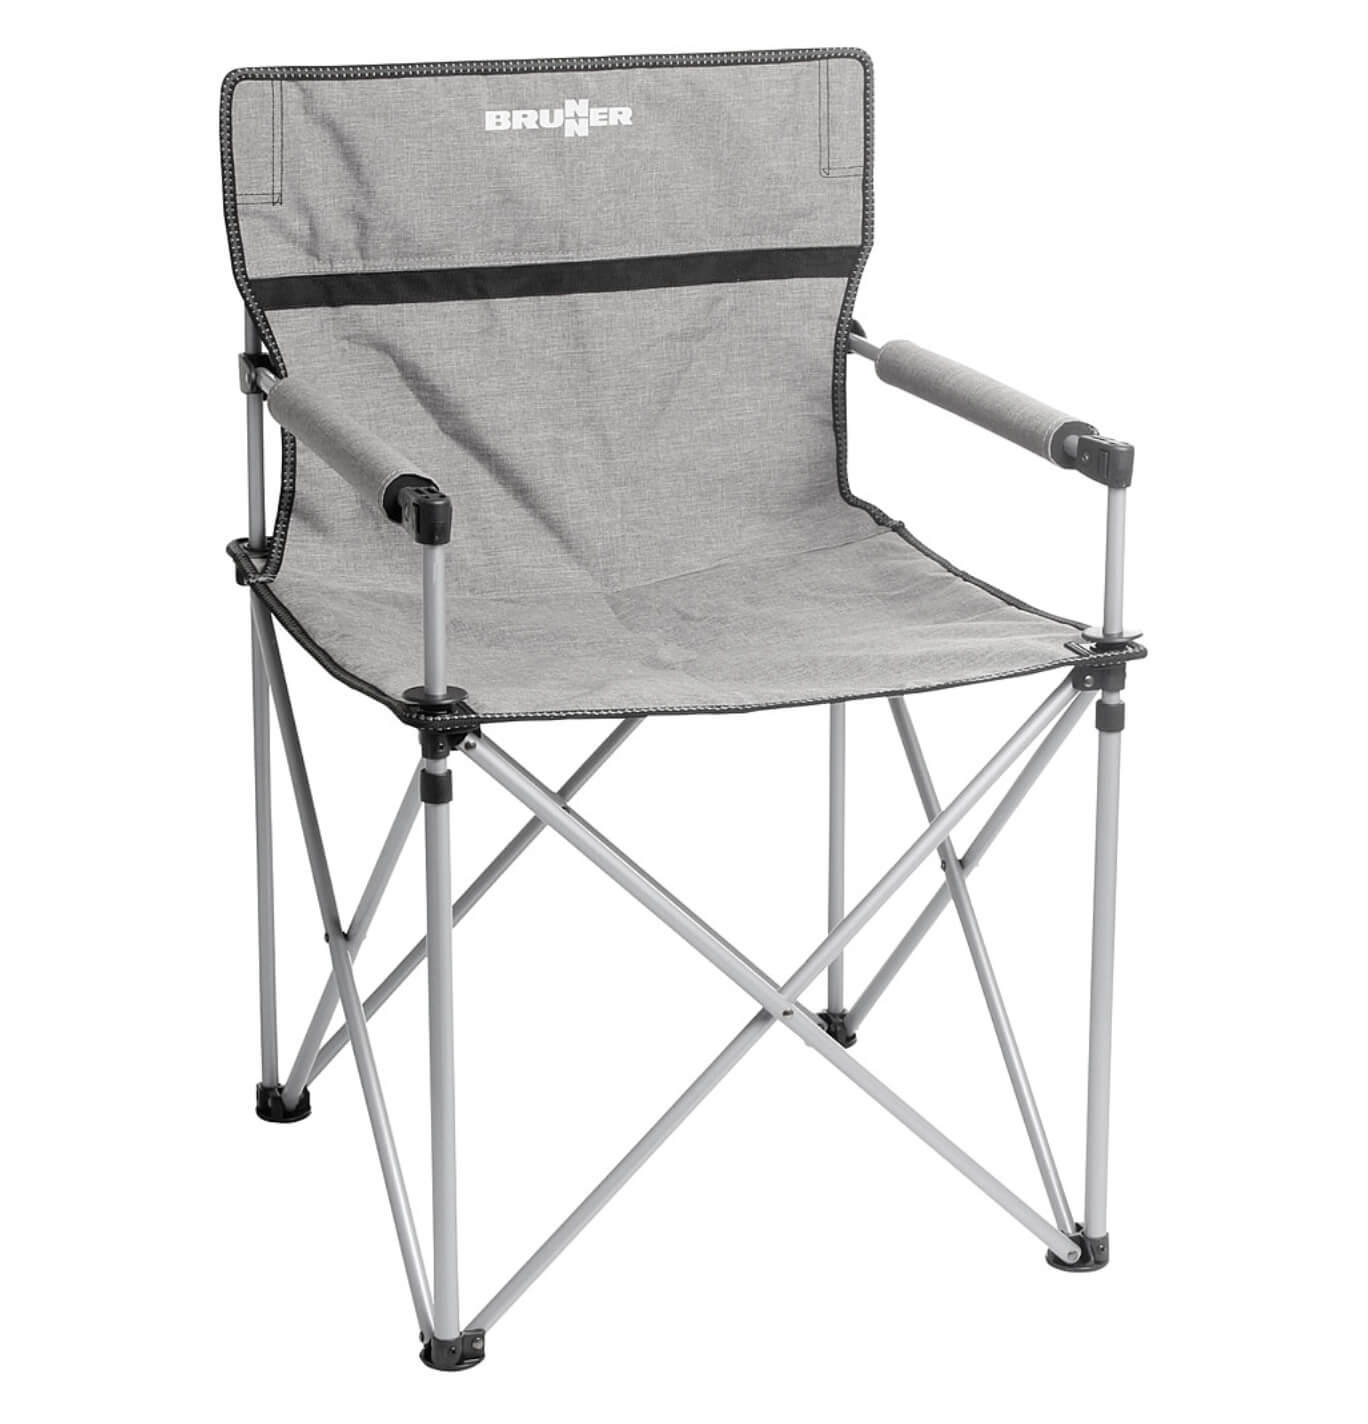 Brunner Director's Demtex Folding Outdoor Camping Chair Image